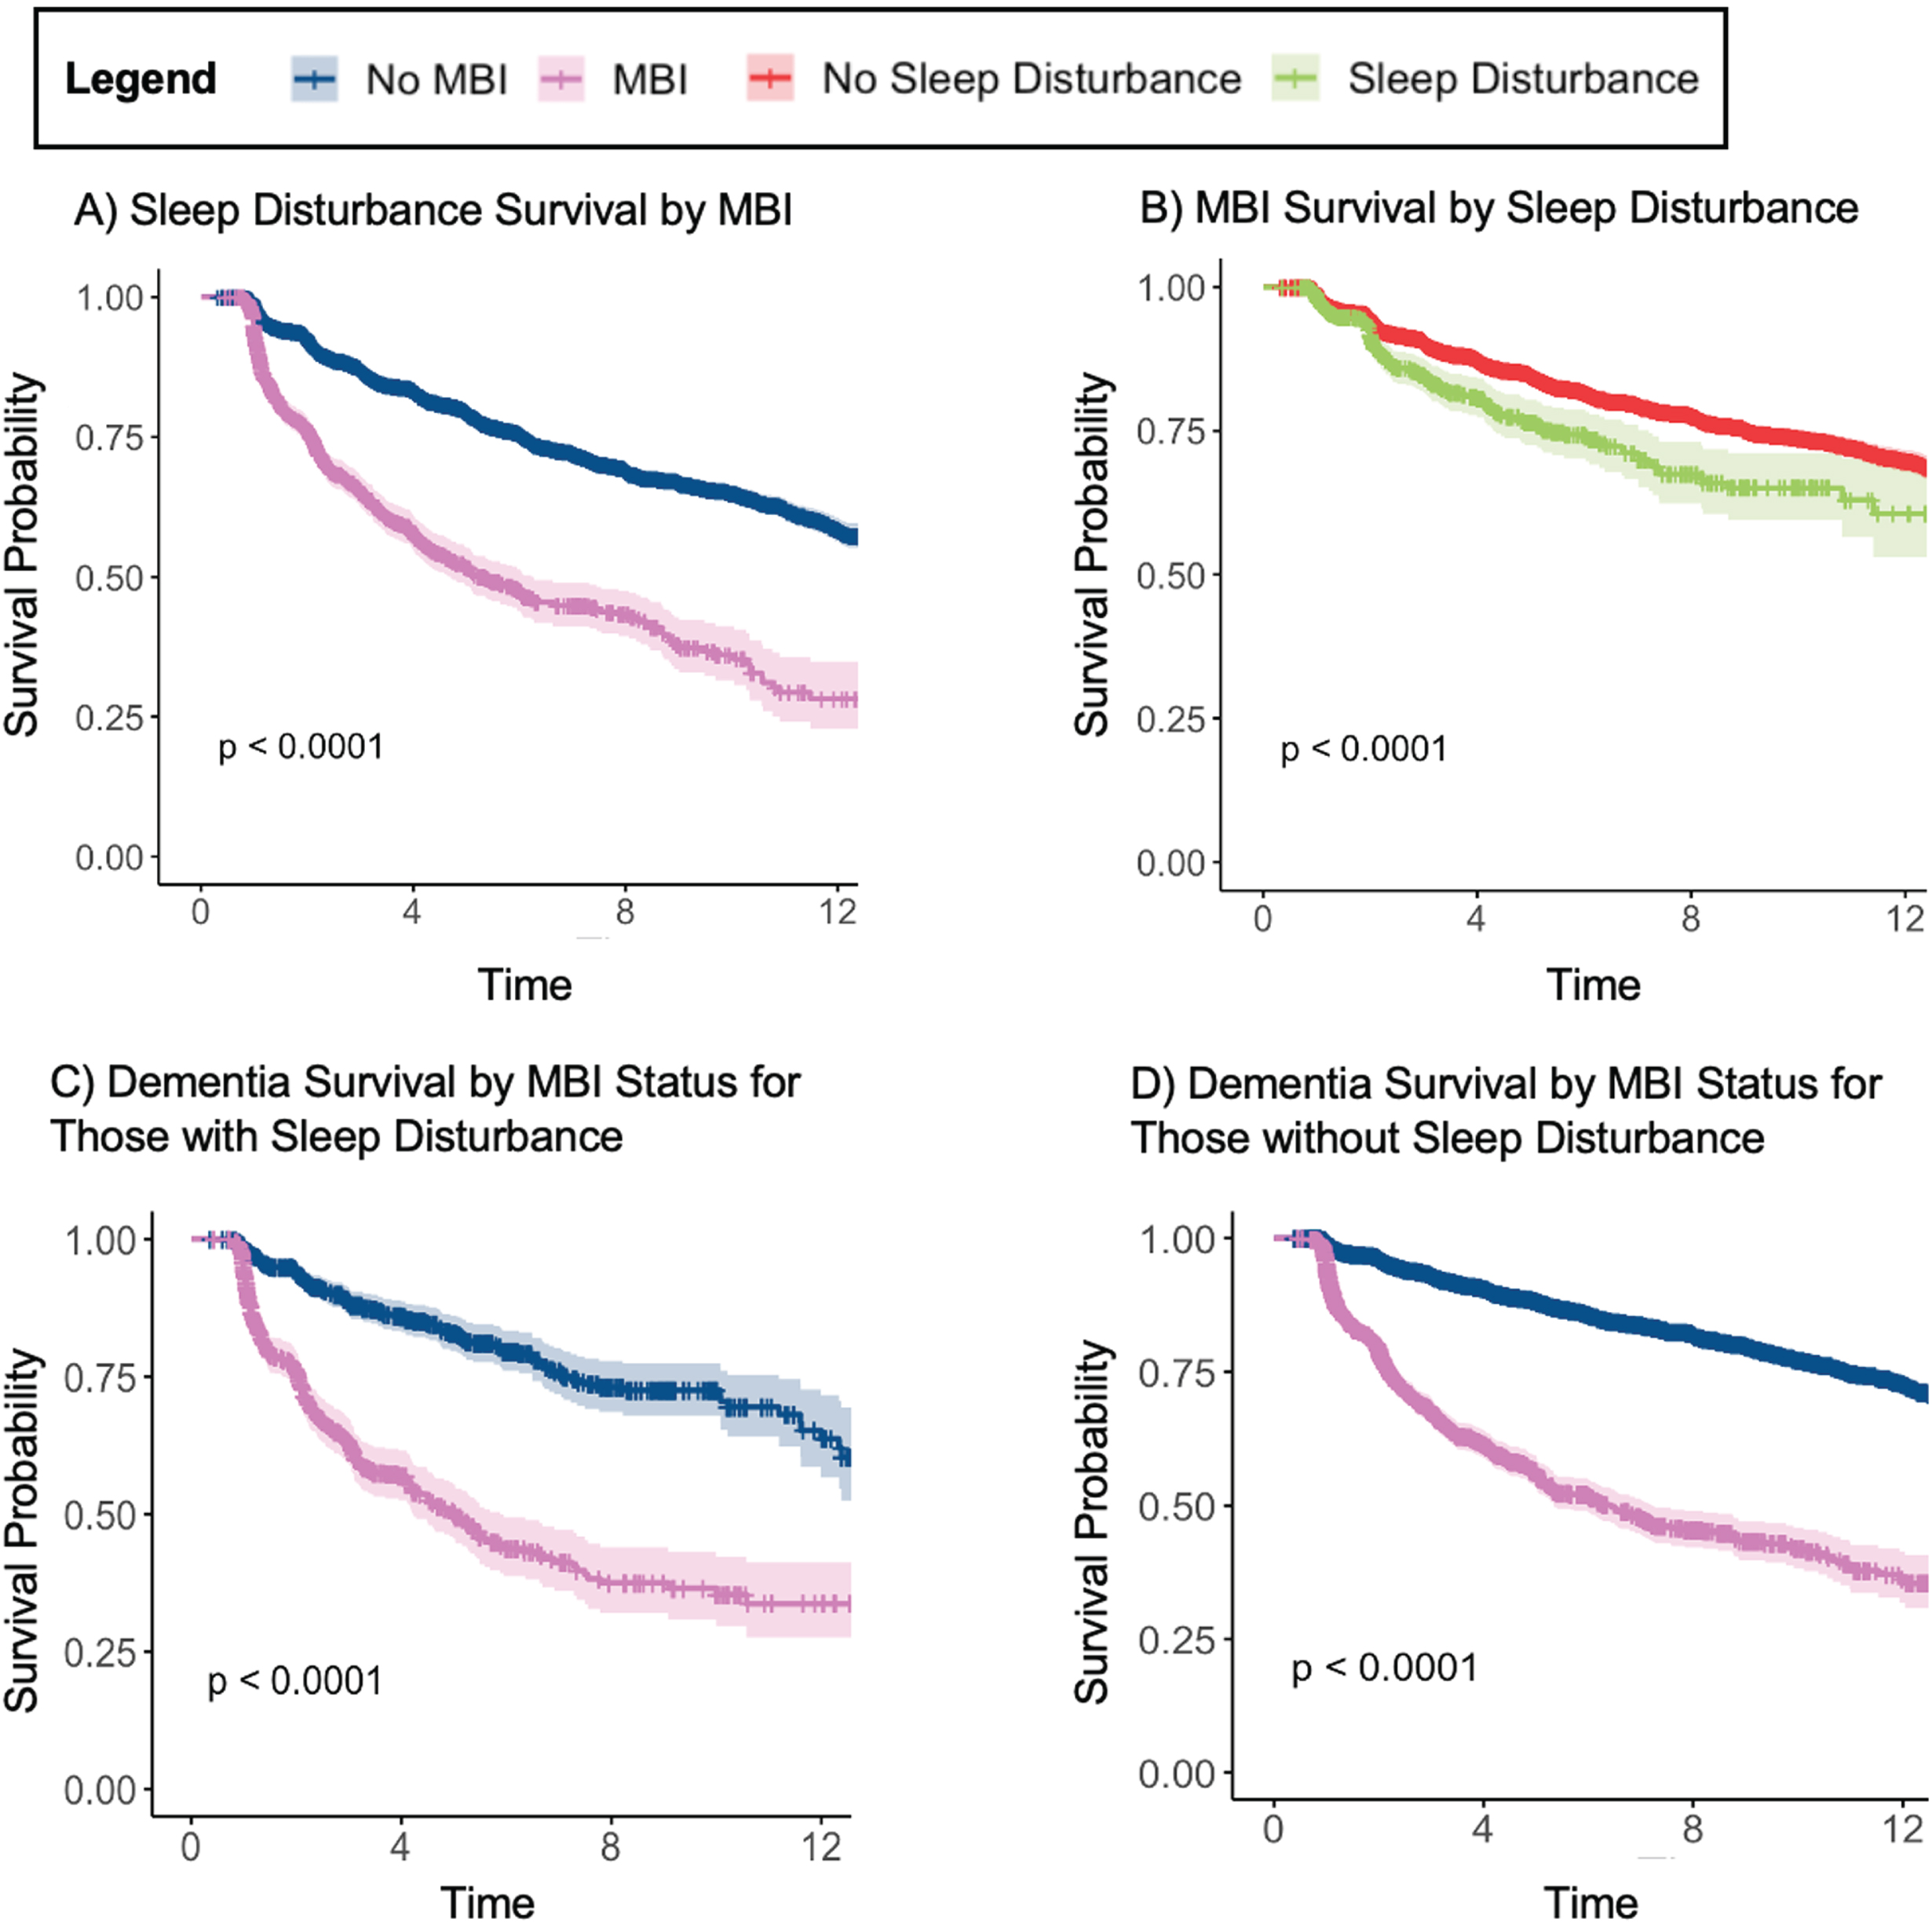 Kaplan-Meier curves up to 12 years for (A) sleep disturbance-free survival based on MBI status (n = 11,277); (B) MBI-free survival based on sleep disturbance (n = 10,535); (C) dementia-free survival based MBI with concurrent sleep disturbance (n = 1,567); (D) dementia-free survival based MBI without concurrent sleep disturbance (n = 11,921).